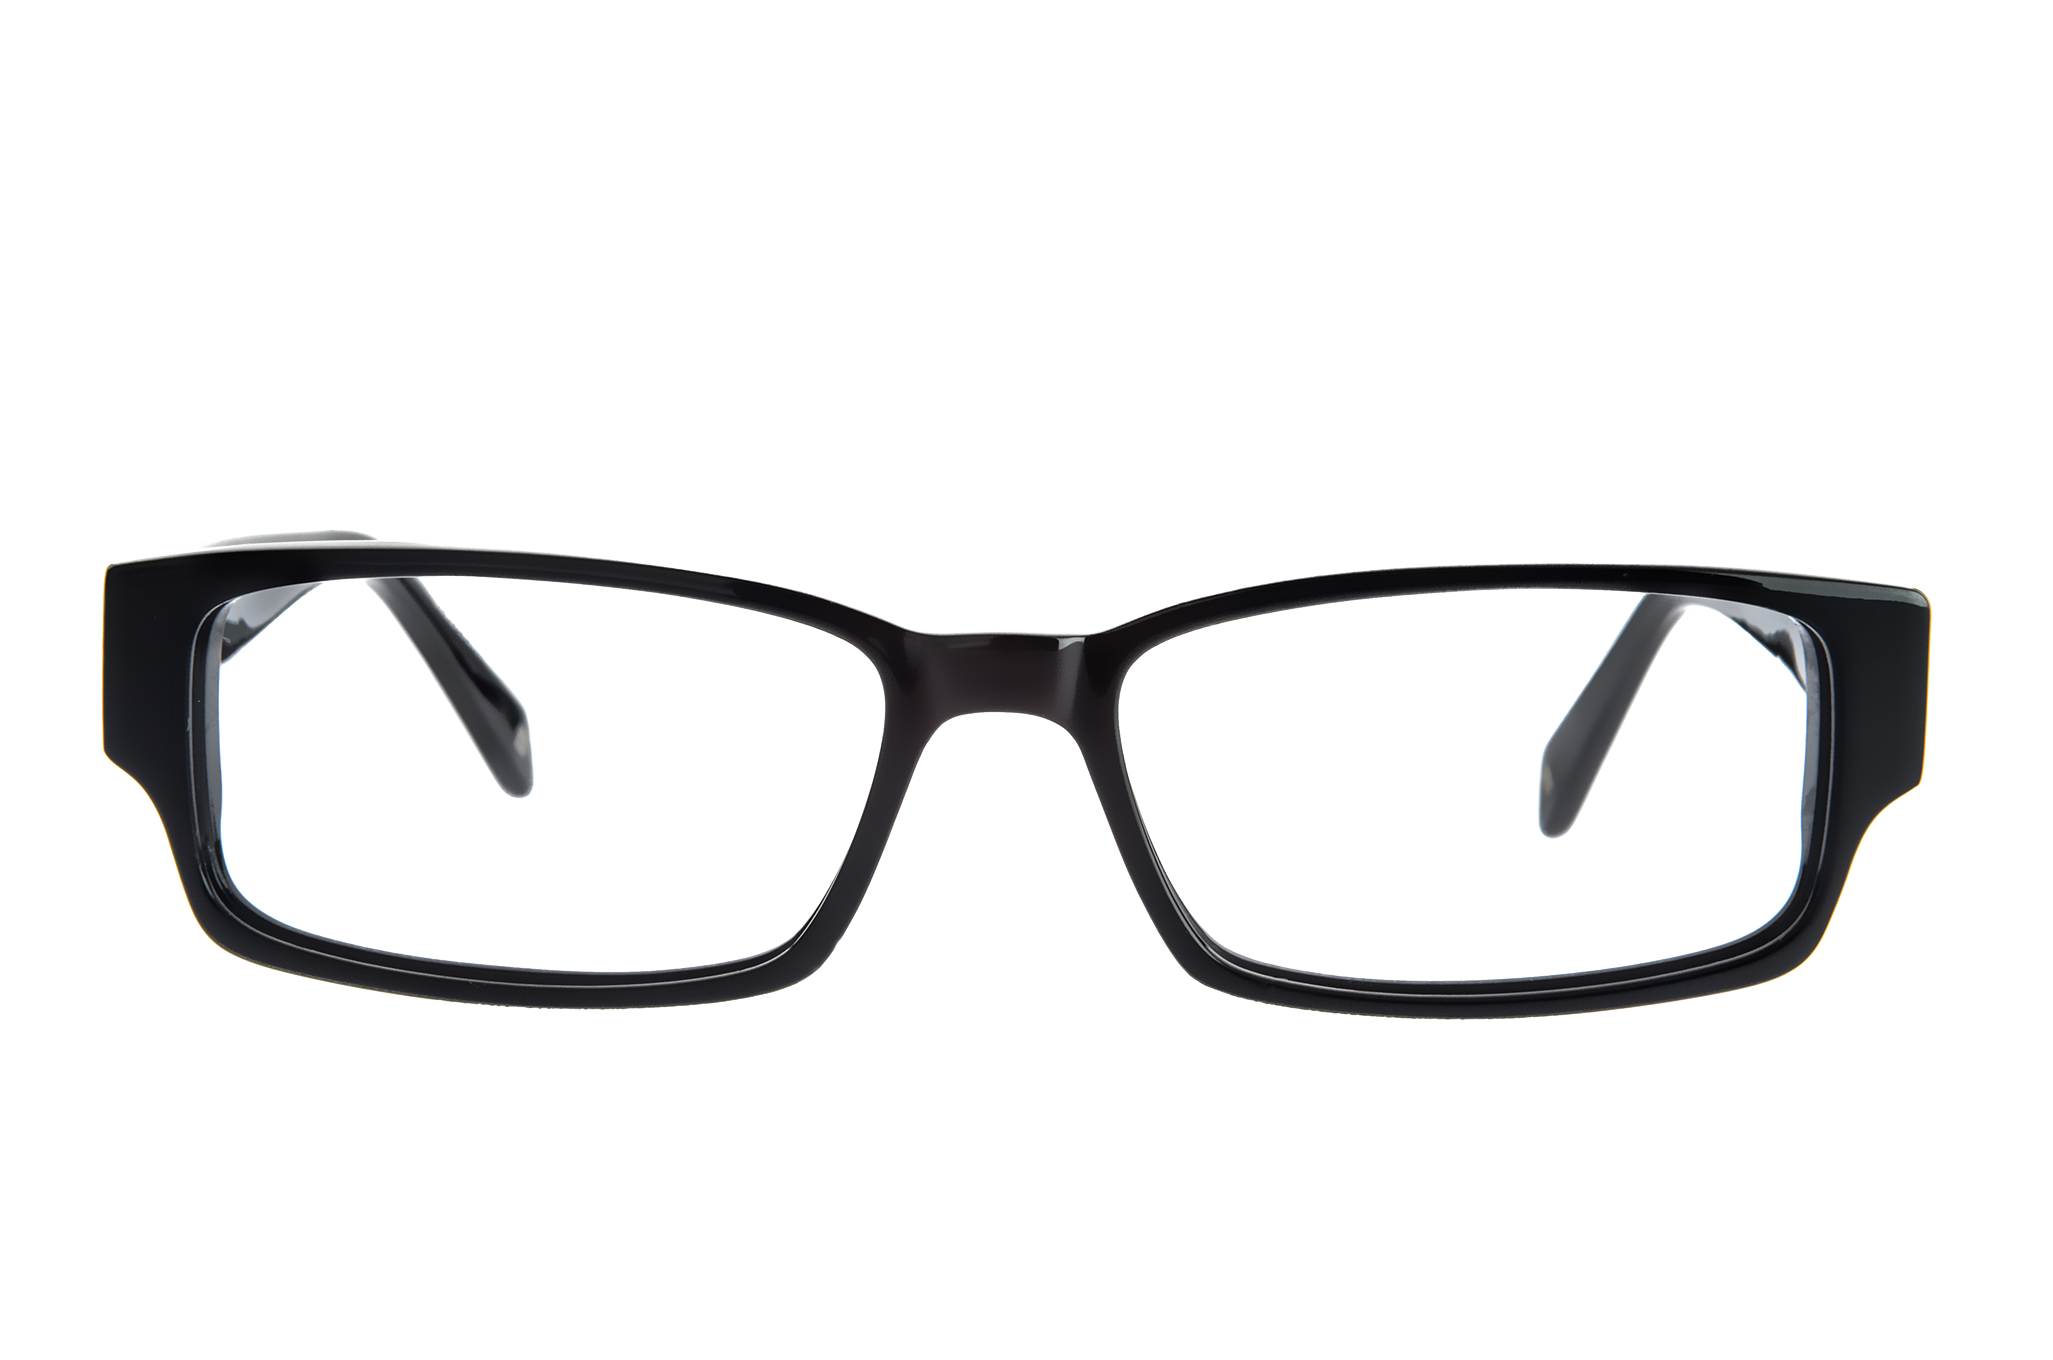 Sunglasses Oakley, Contact Lens Goggles File Inc. Clipart